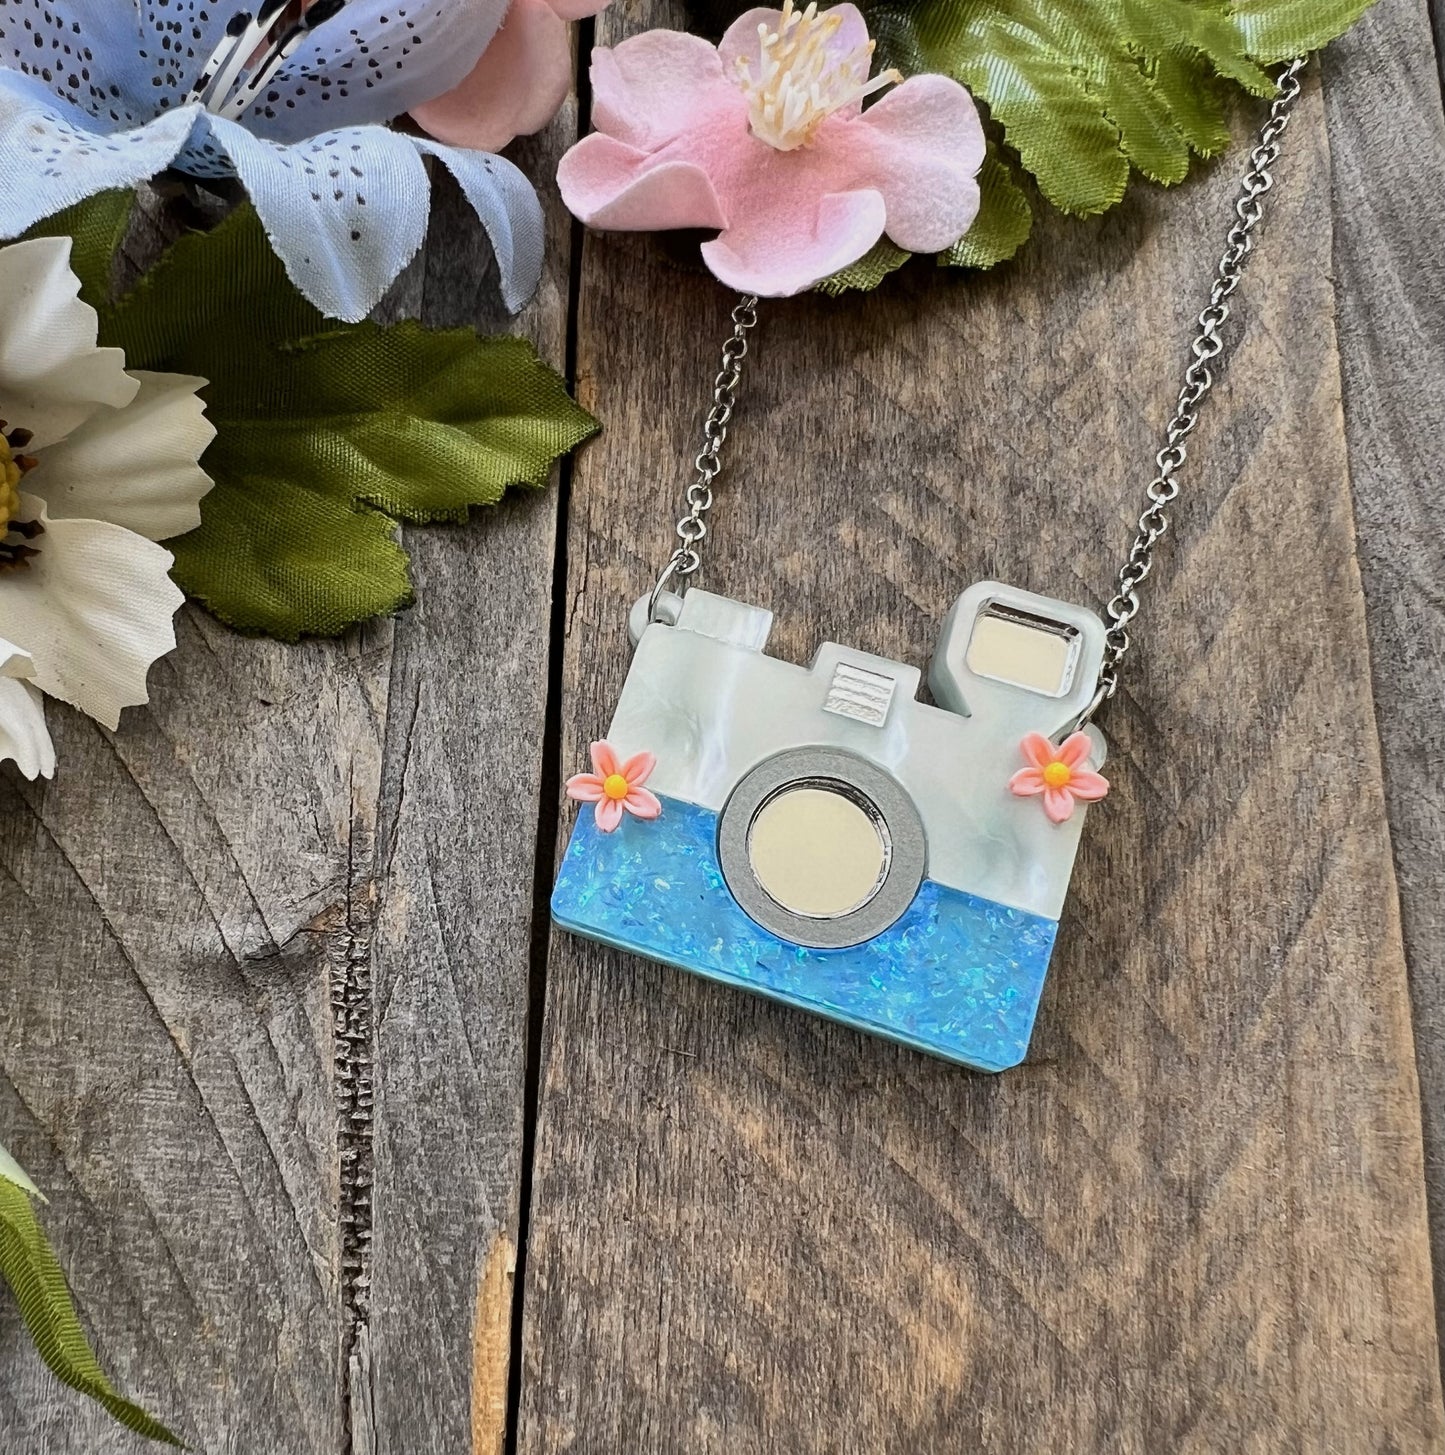 Camera necklace on wood background